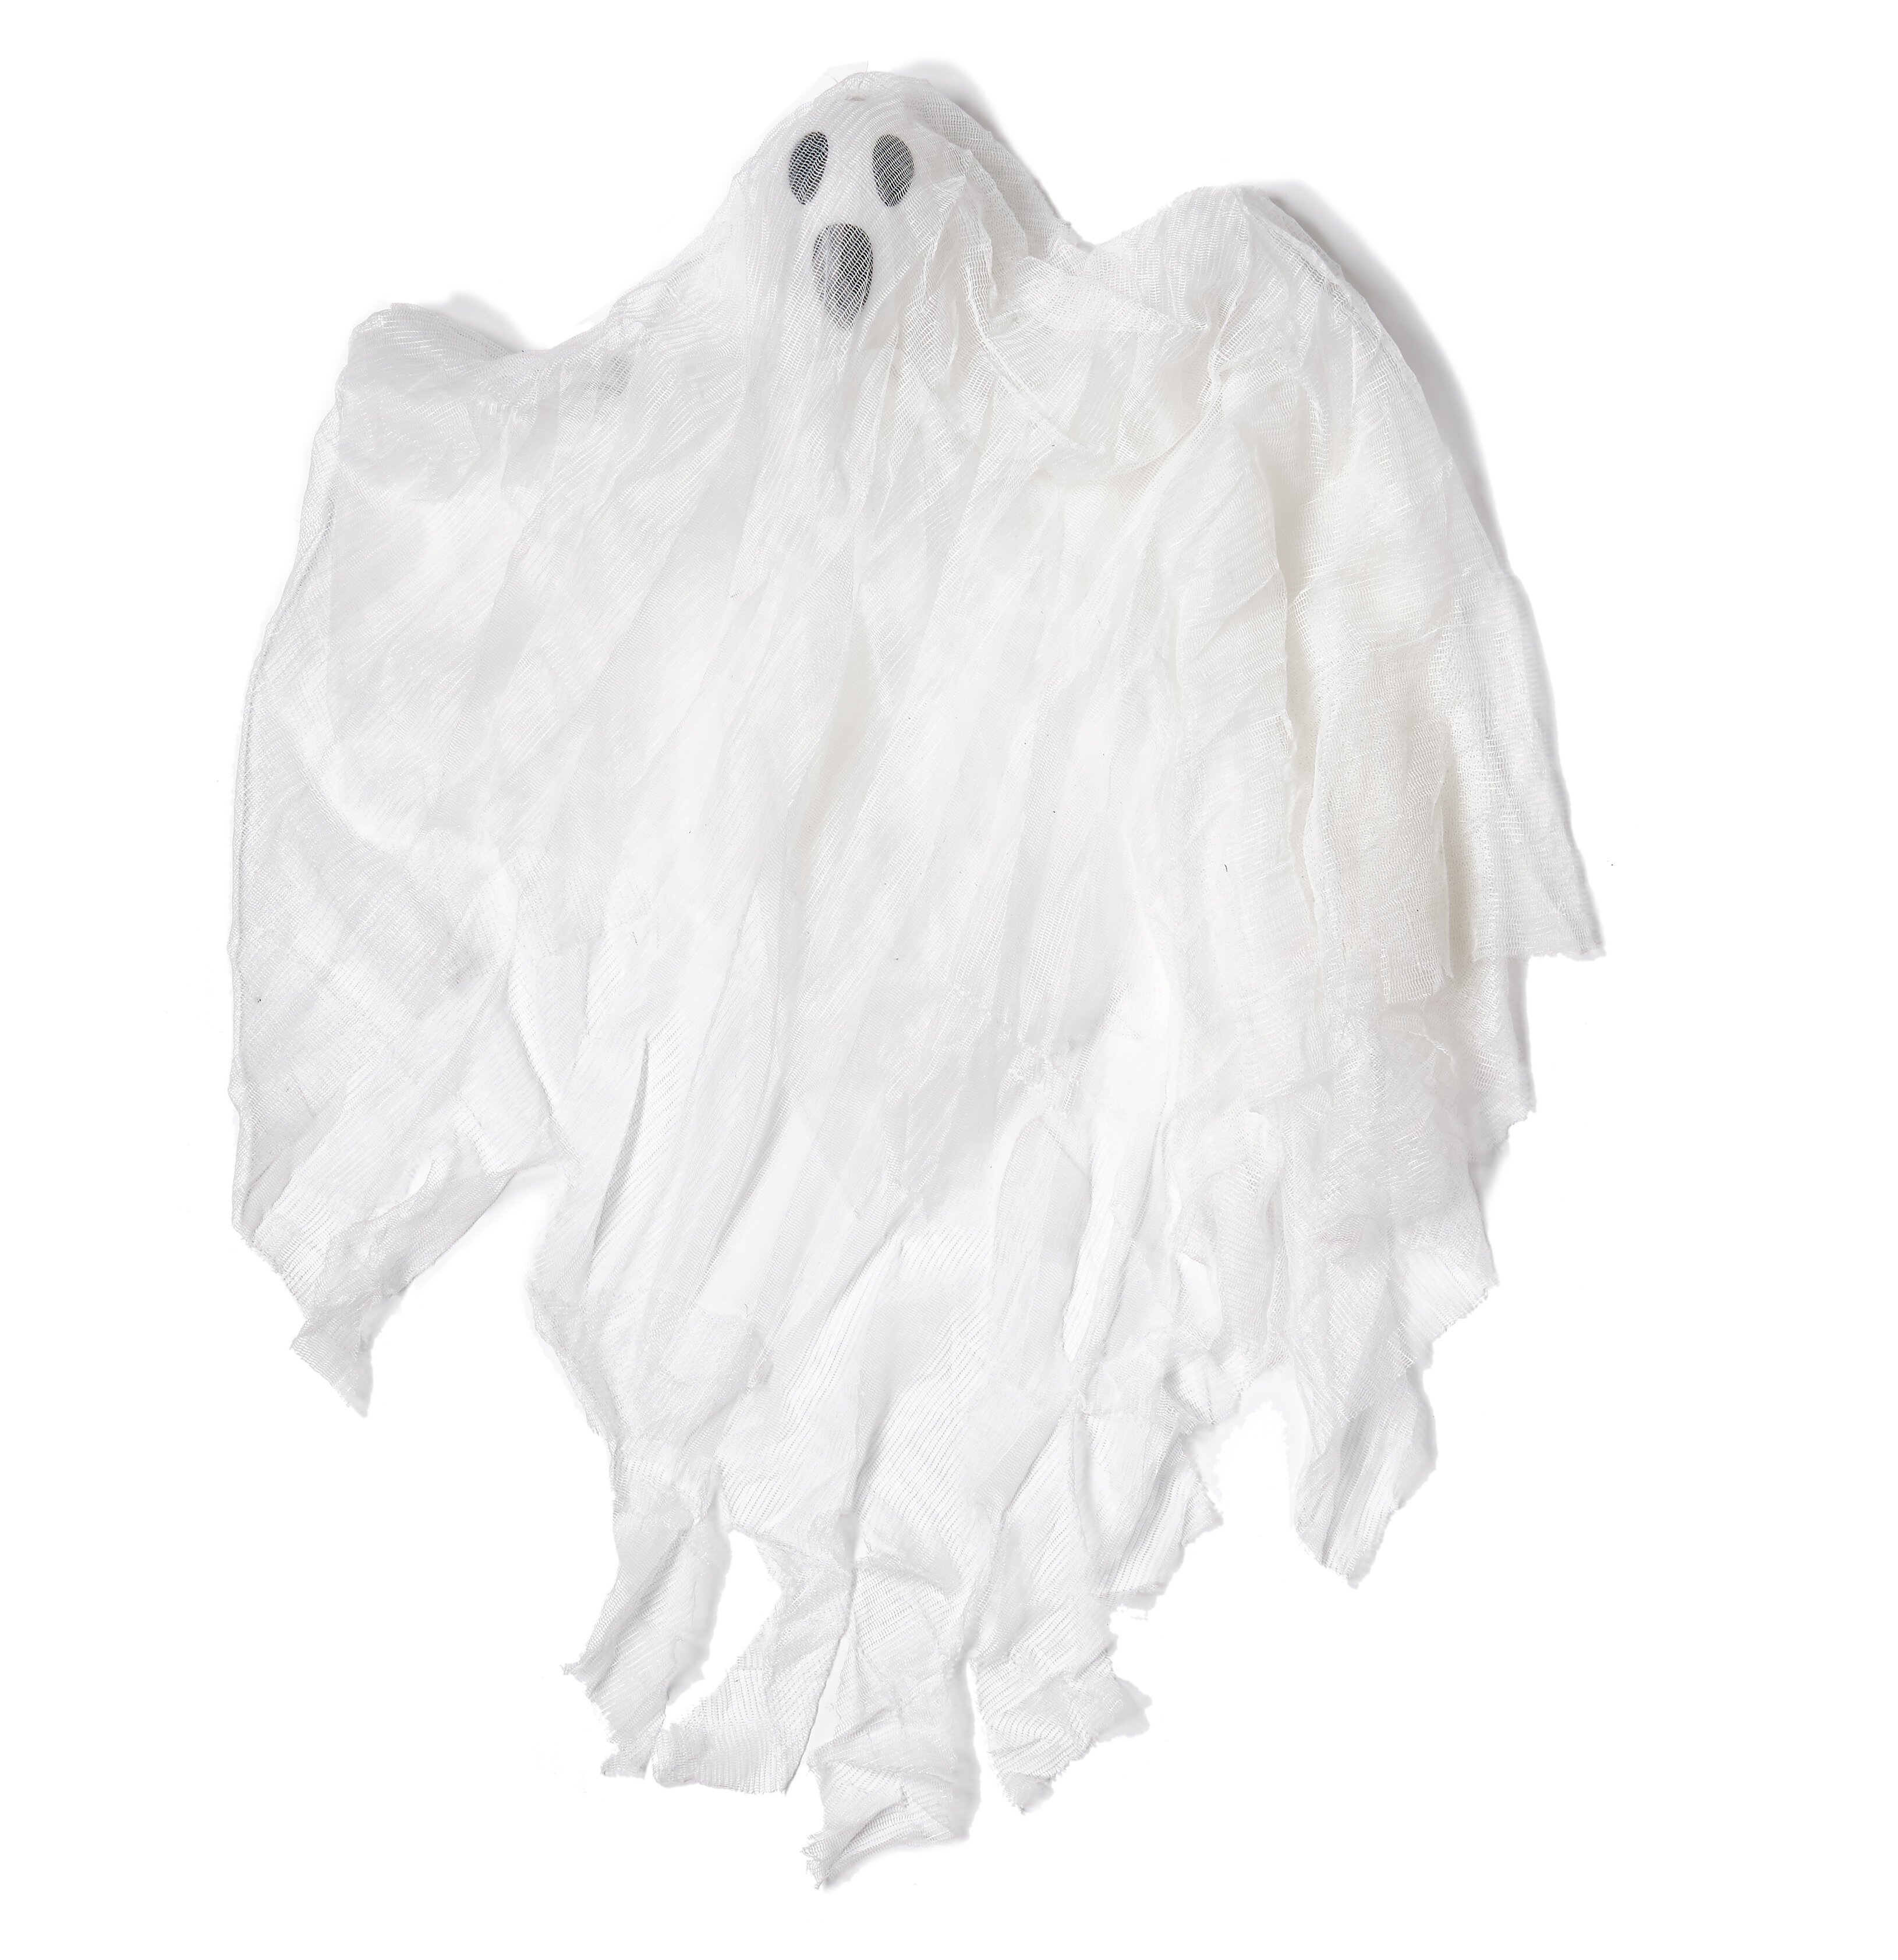 The Holiday Aisle® Hanging Gauzy Fabric Ghost Figurine & Reviews | Wayfair